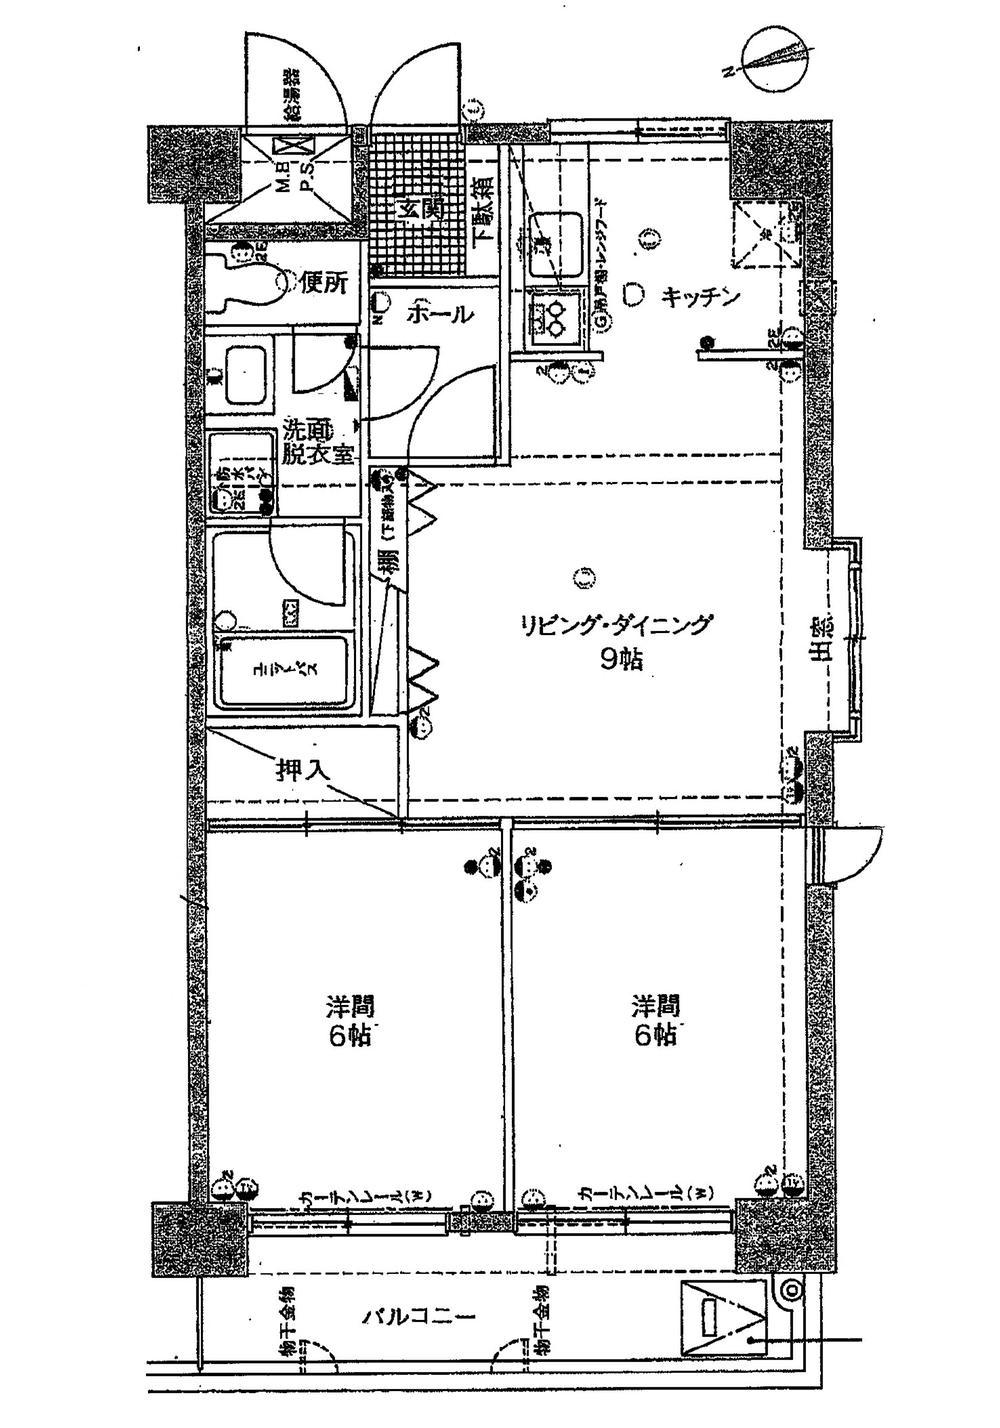 Floor plan. 2LDK, Price 14.8 million yen, Occupied area 53.48 sq m , Balcony area 8.1 sq m